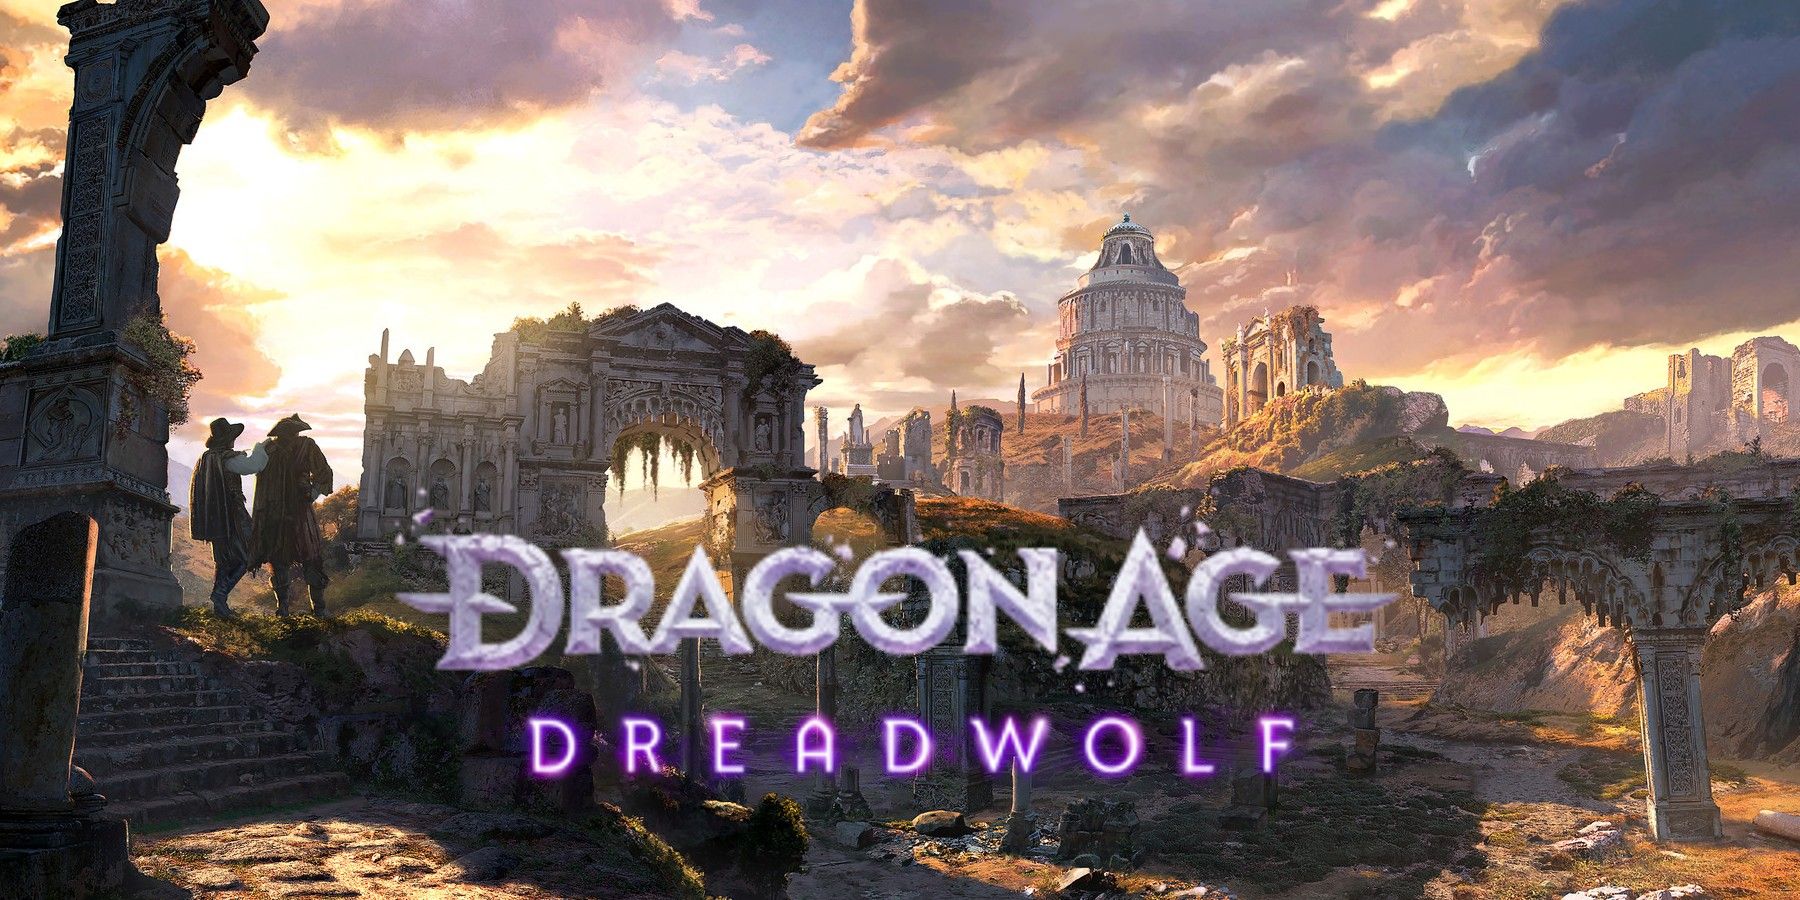 GreedFall 2 screenshot with Dragon Age Dreadwolf logo overlaid